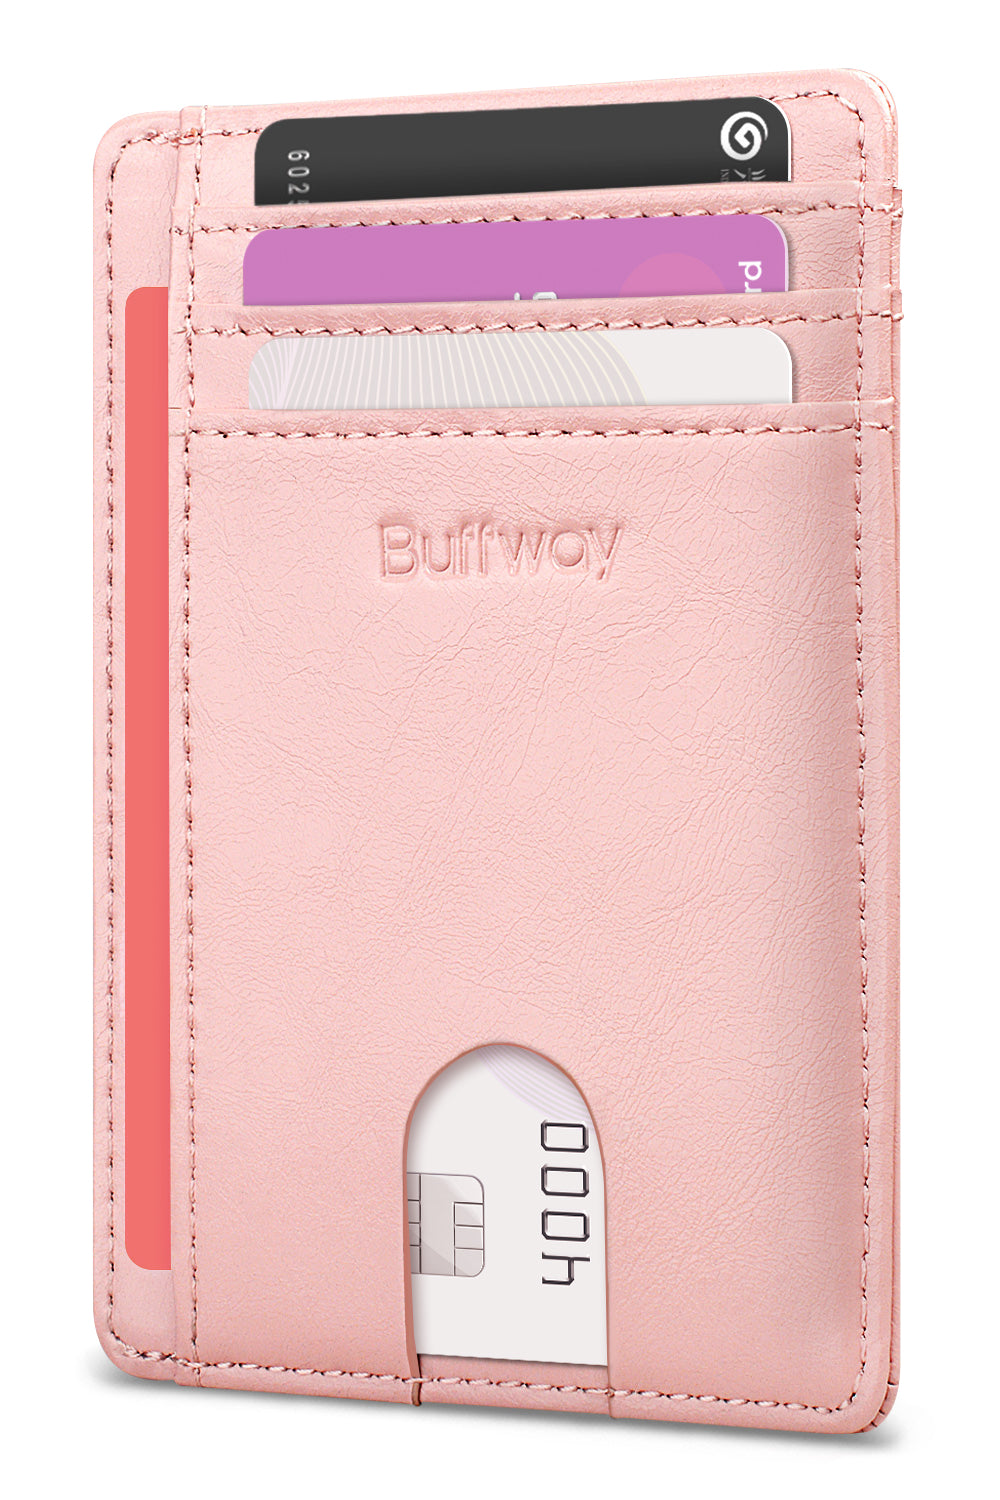 Buffway Slim Minimalist Front Pocket RFID Blocking Leather Wallets for Men and Women - Alaska Pink